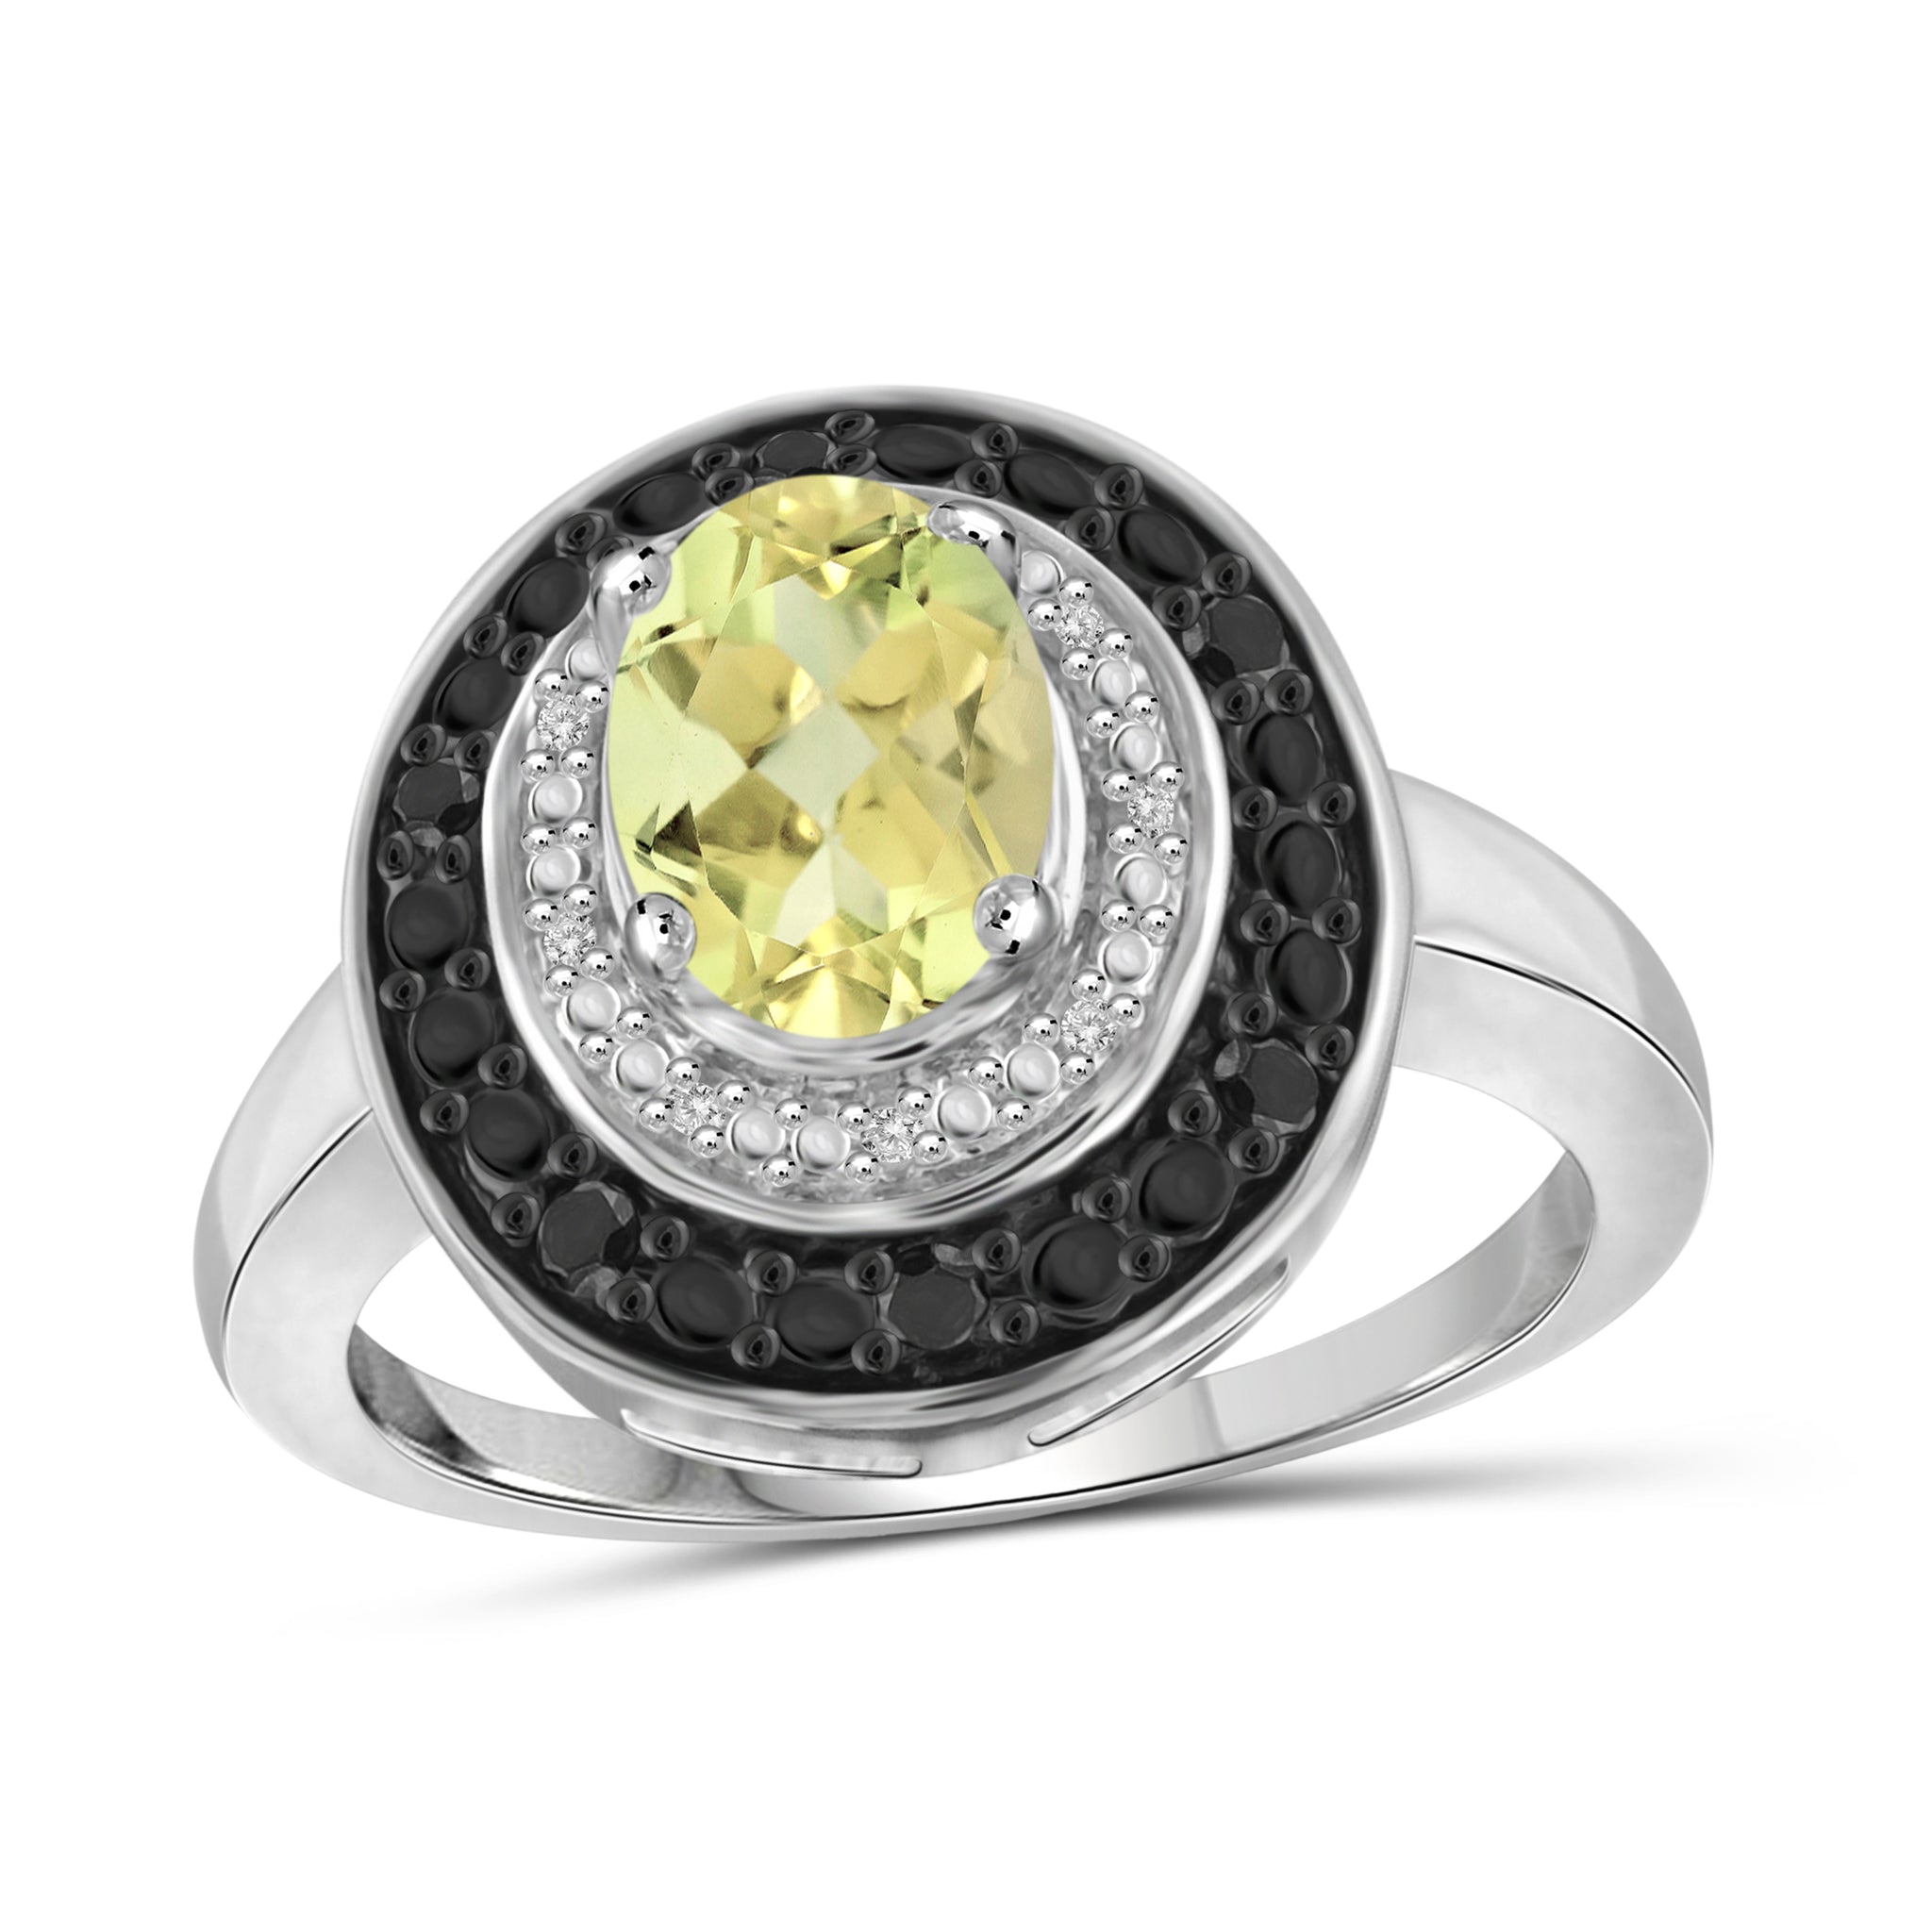 JewelonFire 1.00 Carat T.G.W. Lemon Quartz And 1/7 Carat T.W. Black & White Diamond Sterling Silver Ring - Assorted Colors